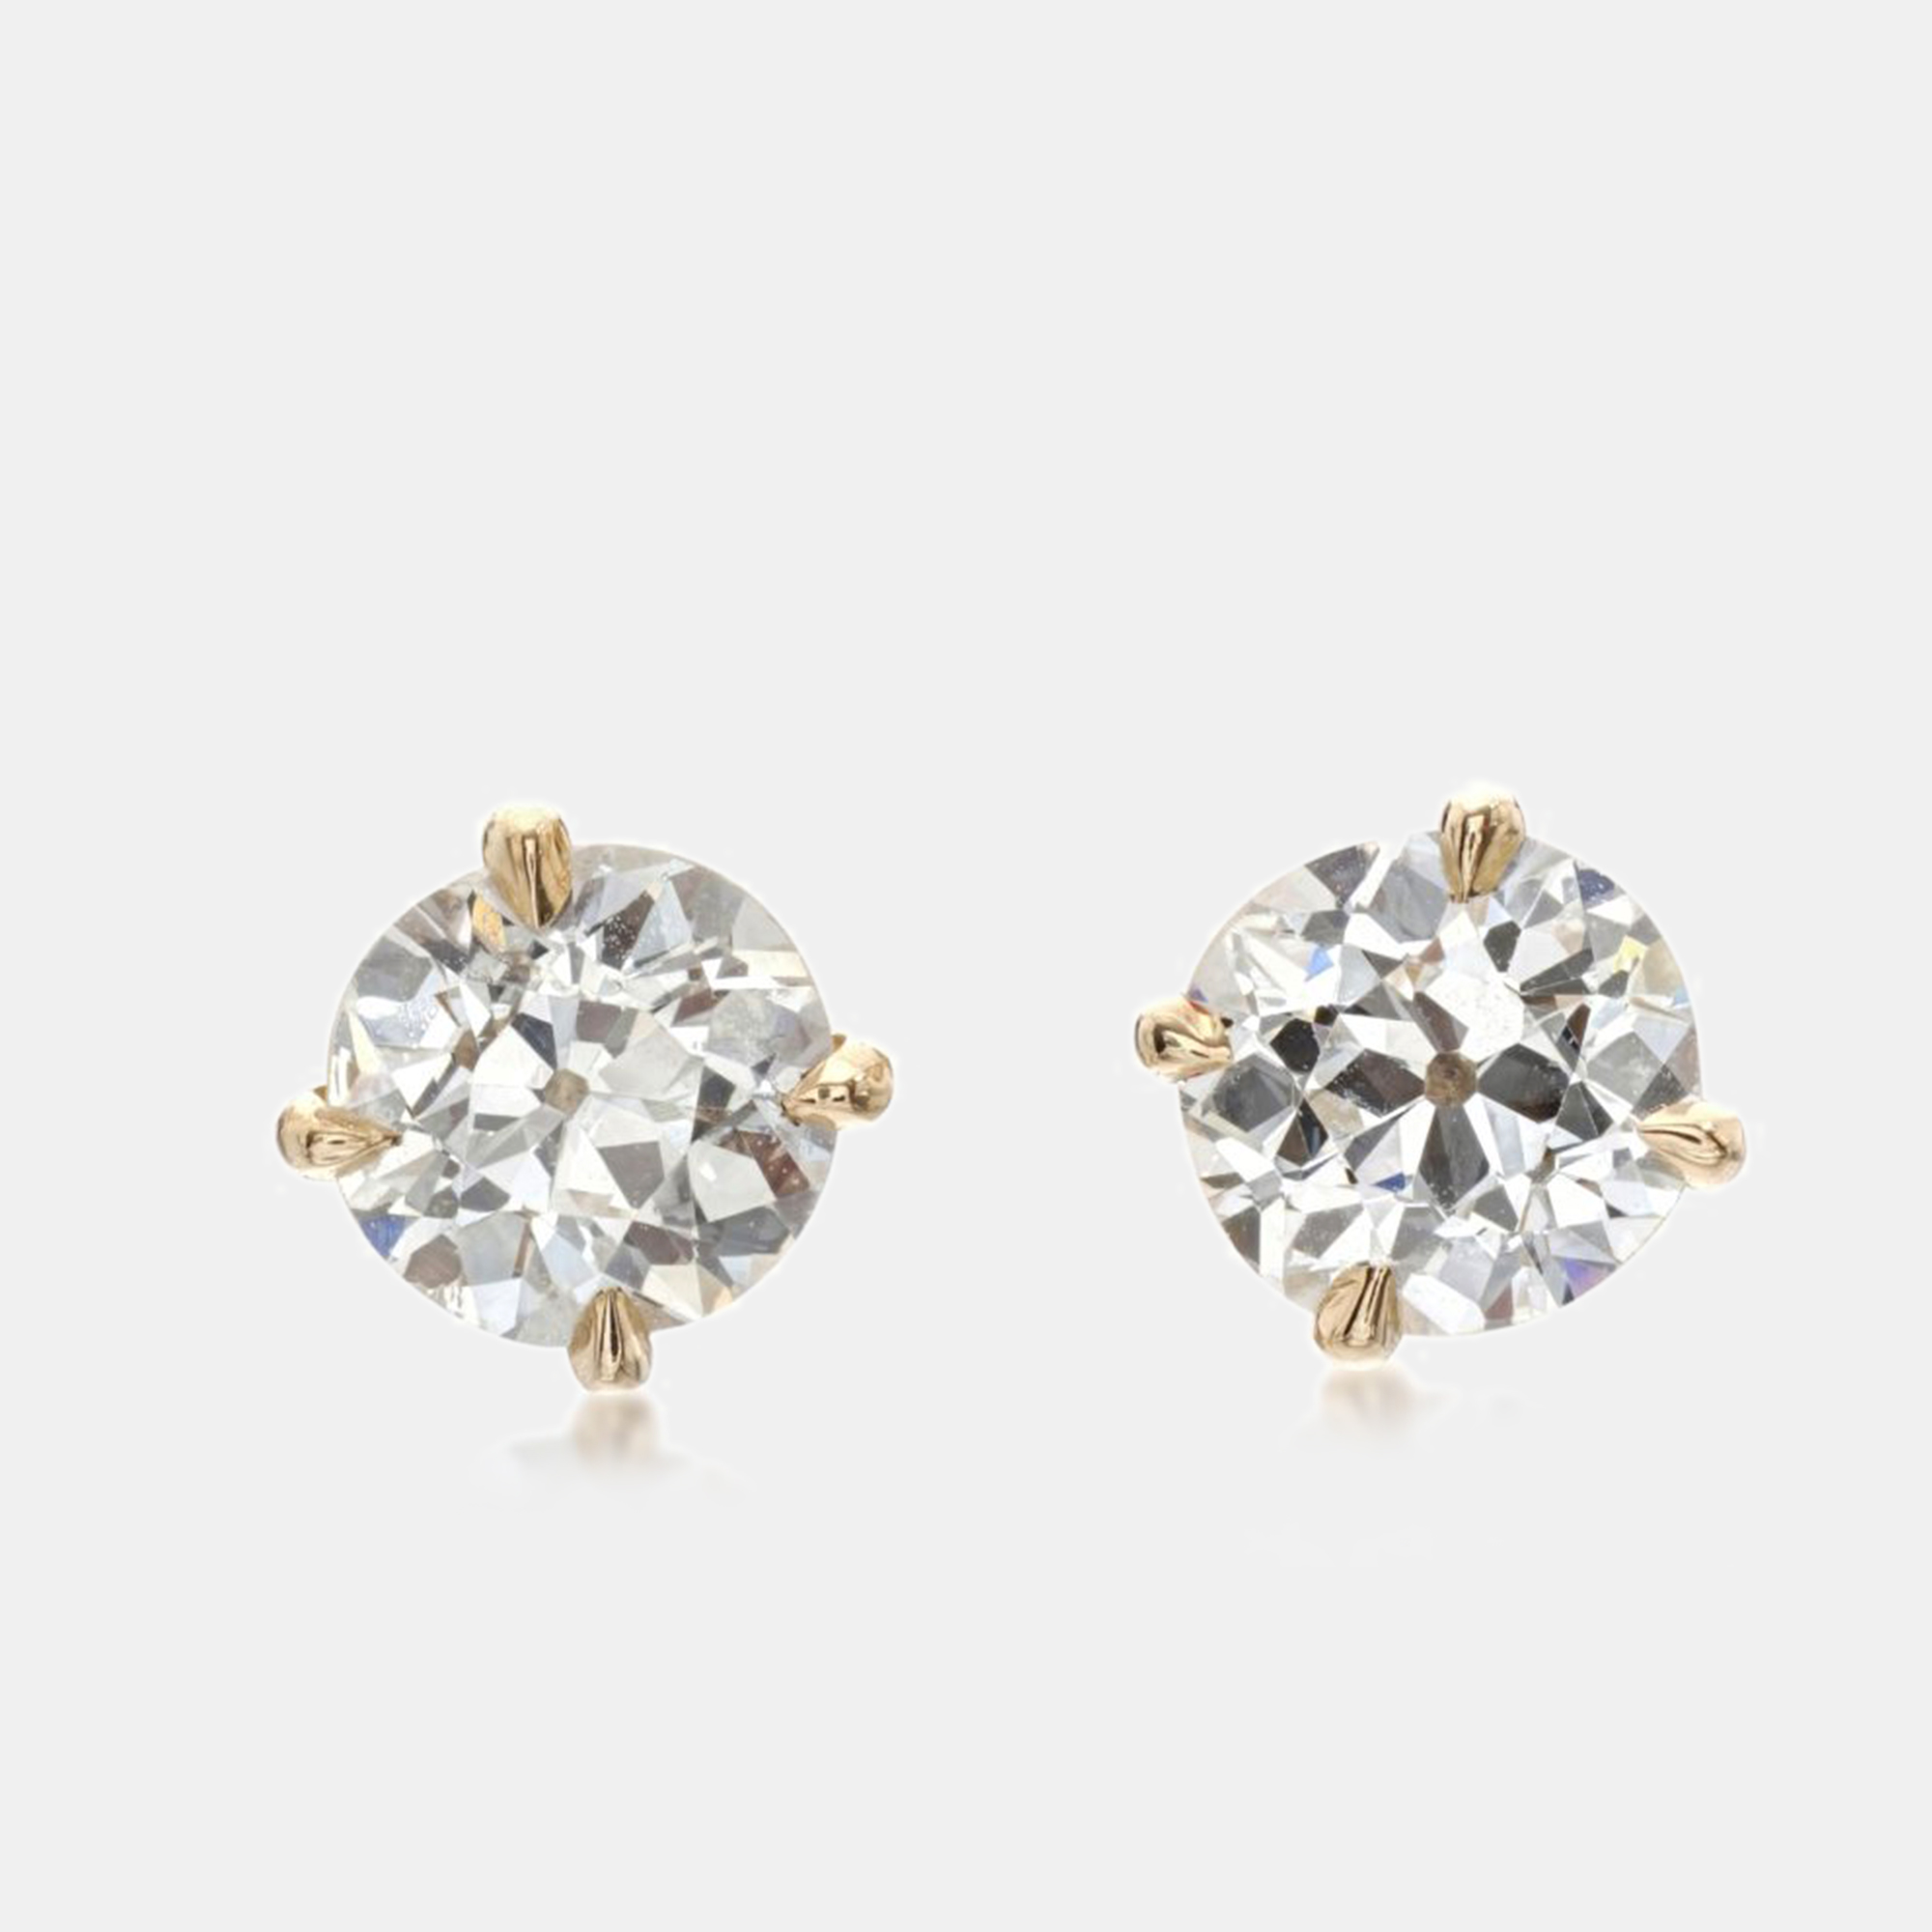 The diamond edit 18k yellow gold diamonds 1.20 ct. stud earrings